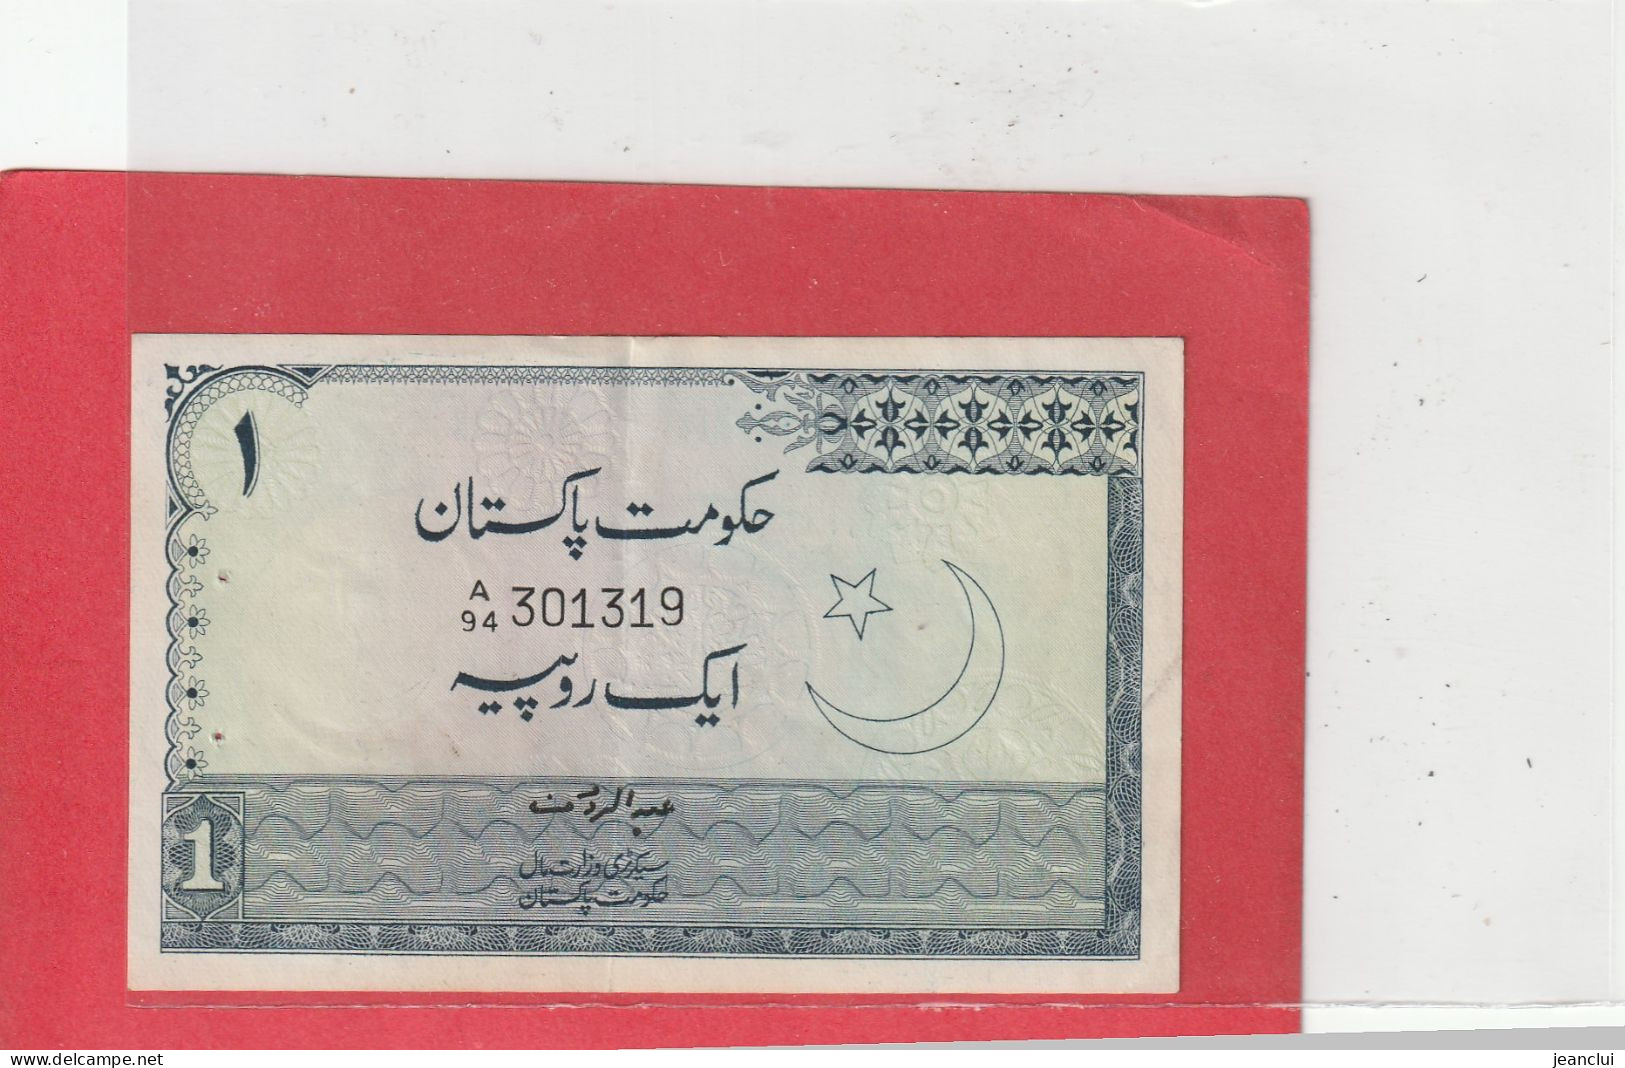 GOVERNMENT OF PAKISTAN . 1 RUPEE .  N D ( 1975-81 ).  N° A/94 301319  .  2 SCANNES - Pakistan